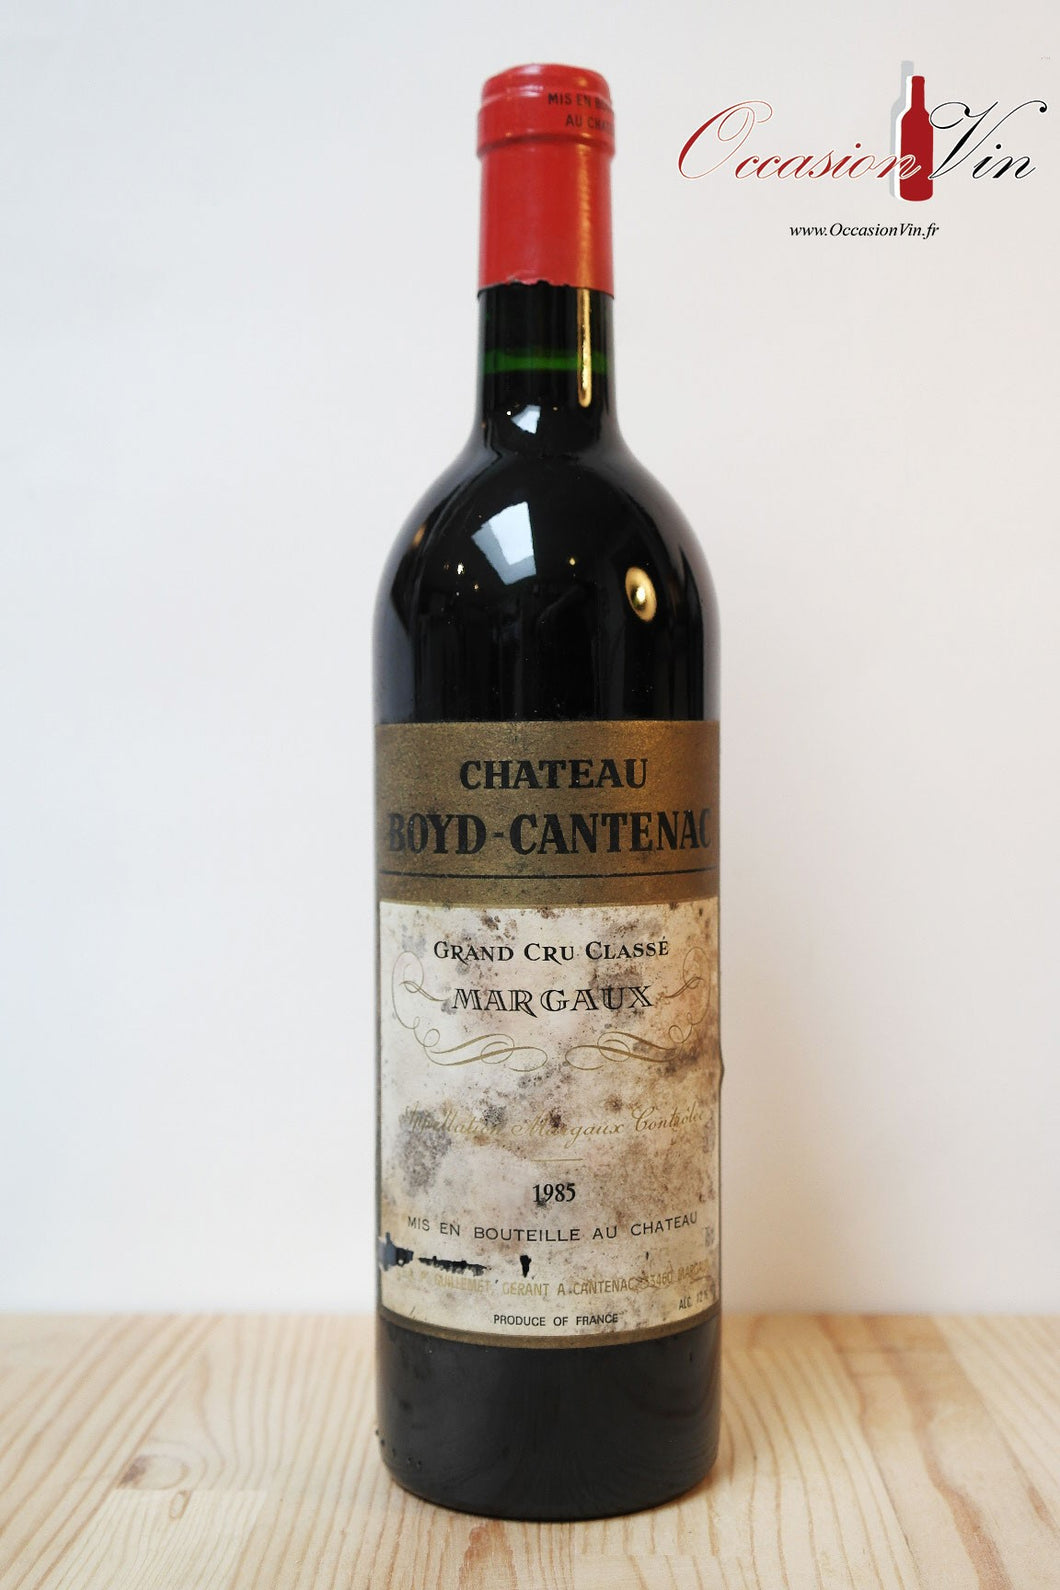 Château Boyd-Cantenac Vin 1985